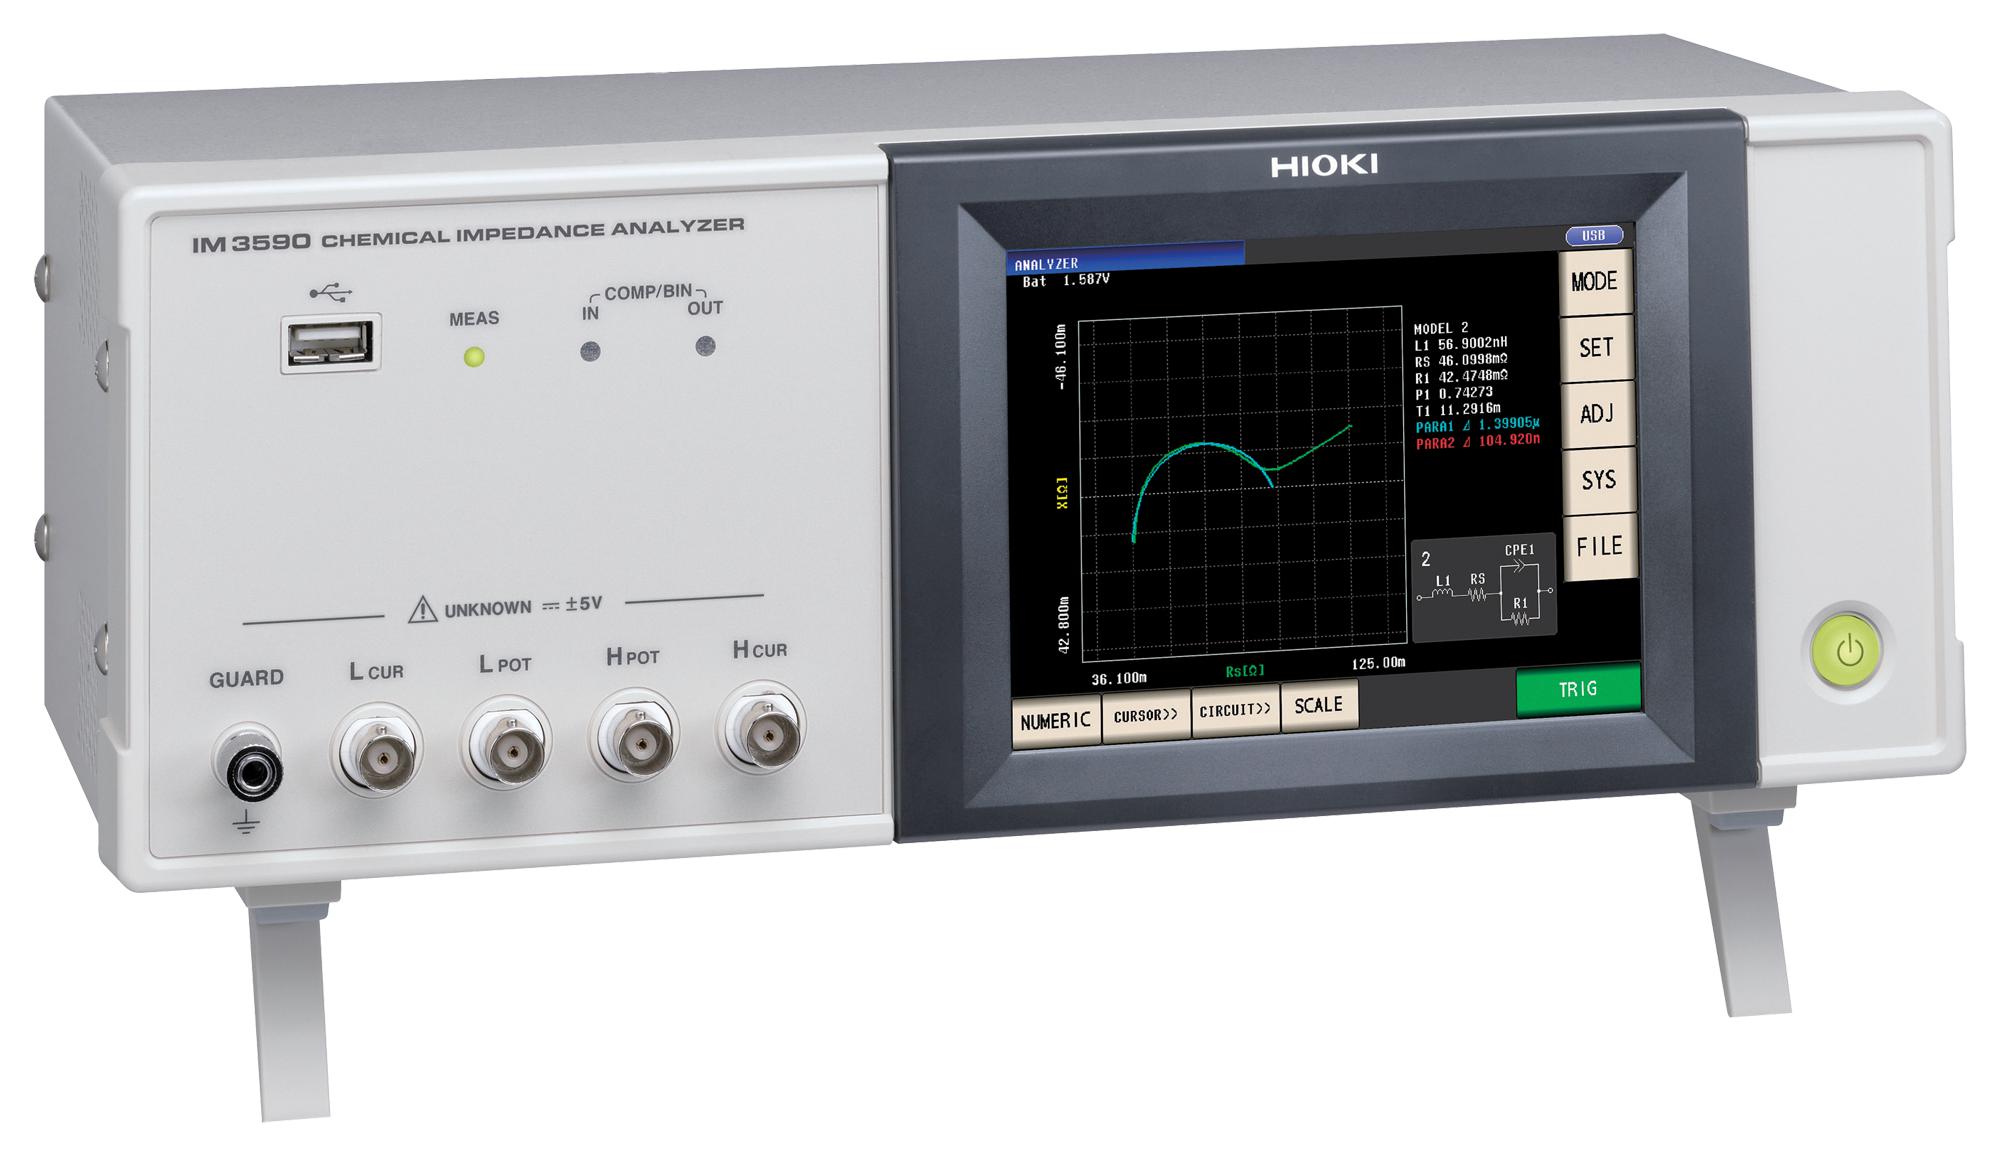 Hioki Im3590 Chemical Impedance Analyzer, 0.005 To 5V